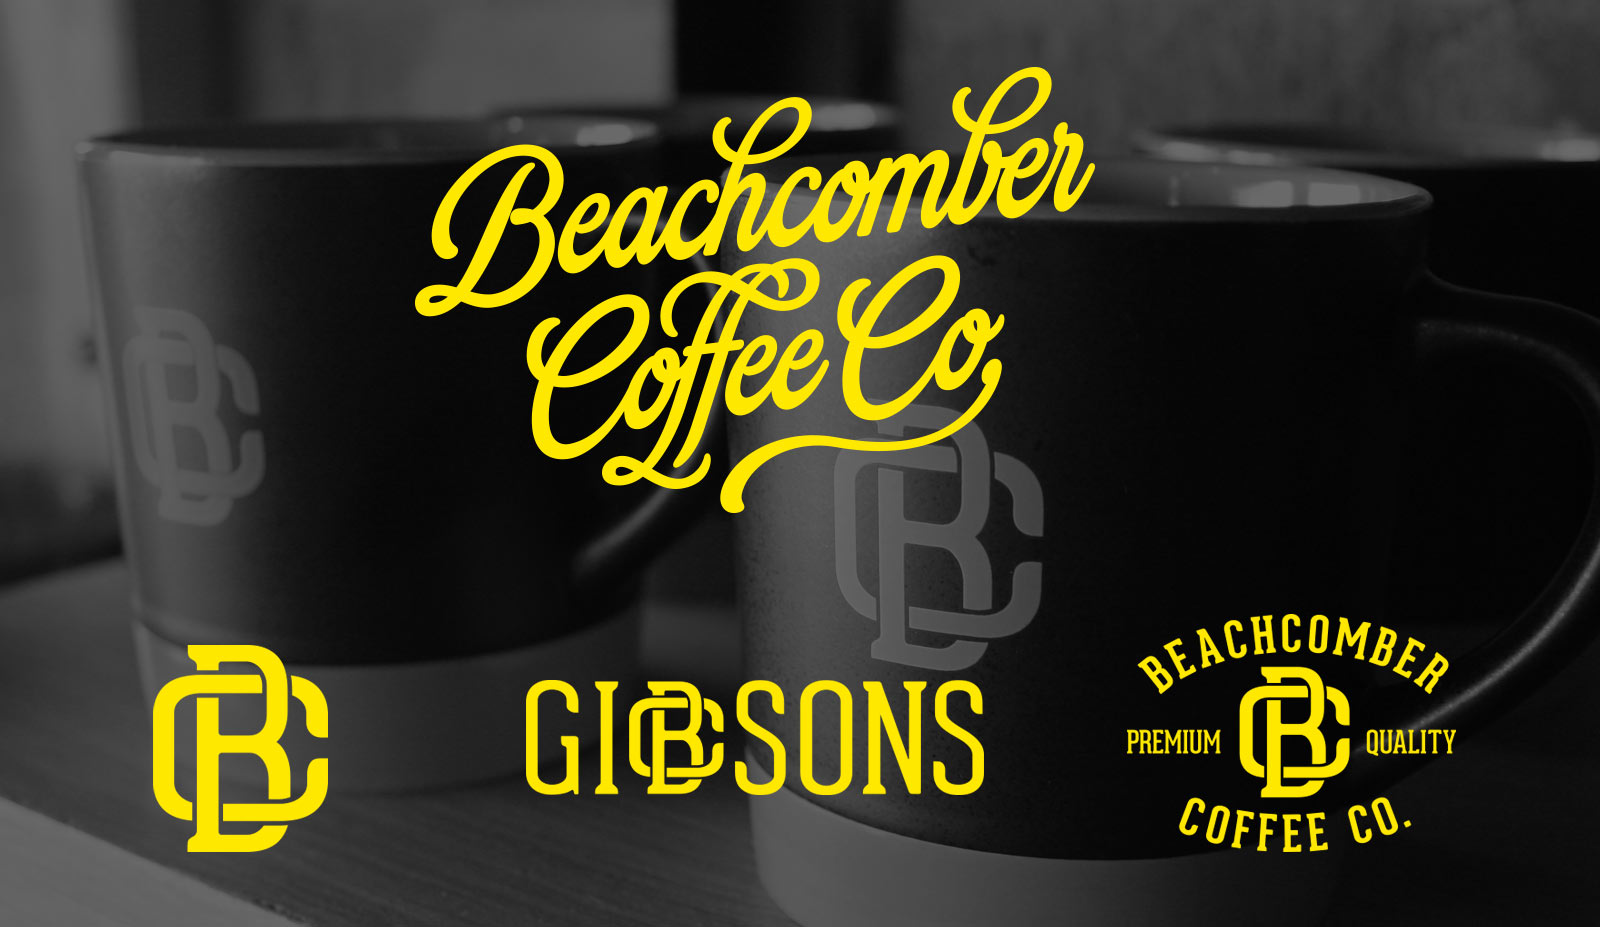 Beachcomber_coffee_logo_samples.jpg